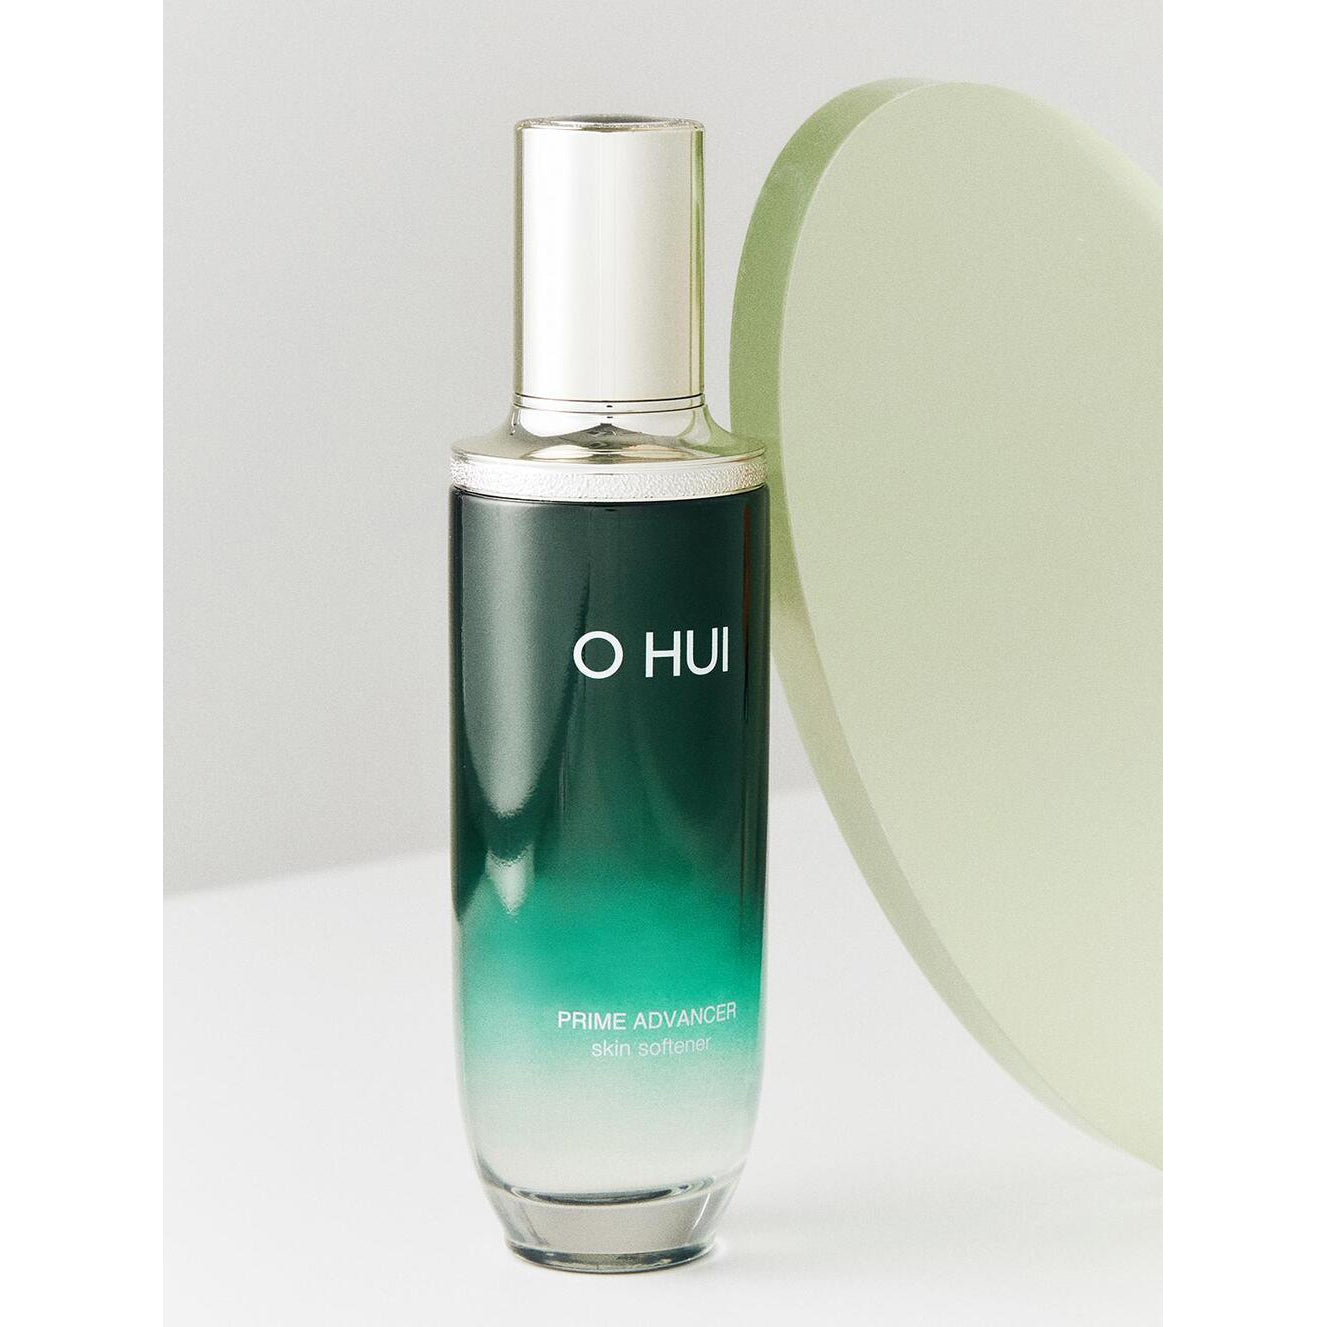 O HUI Prime Advancer Skin Softener 150ml